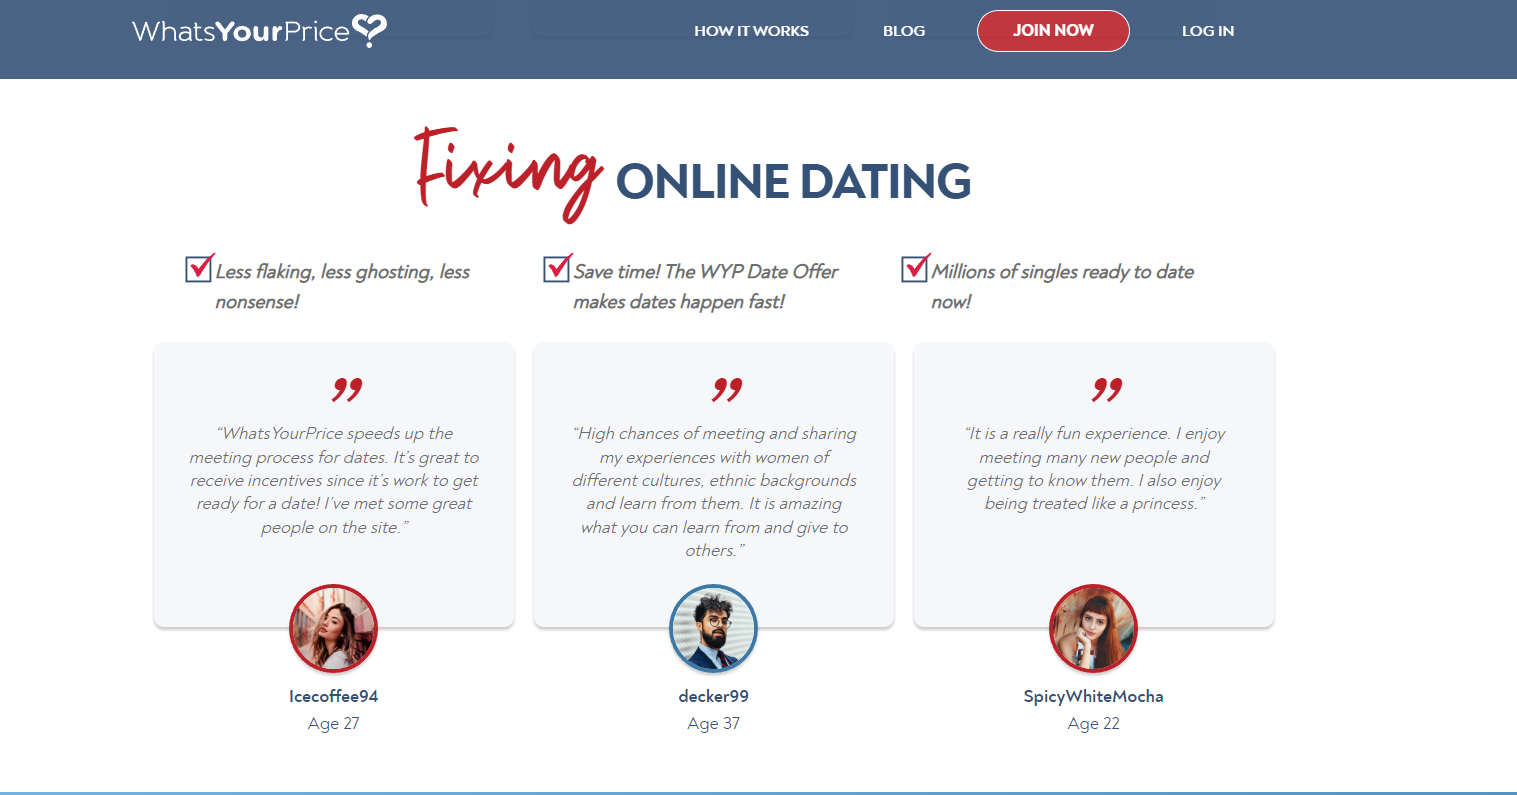 Uk free dating Dating Sites